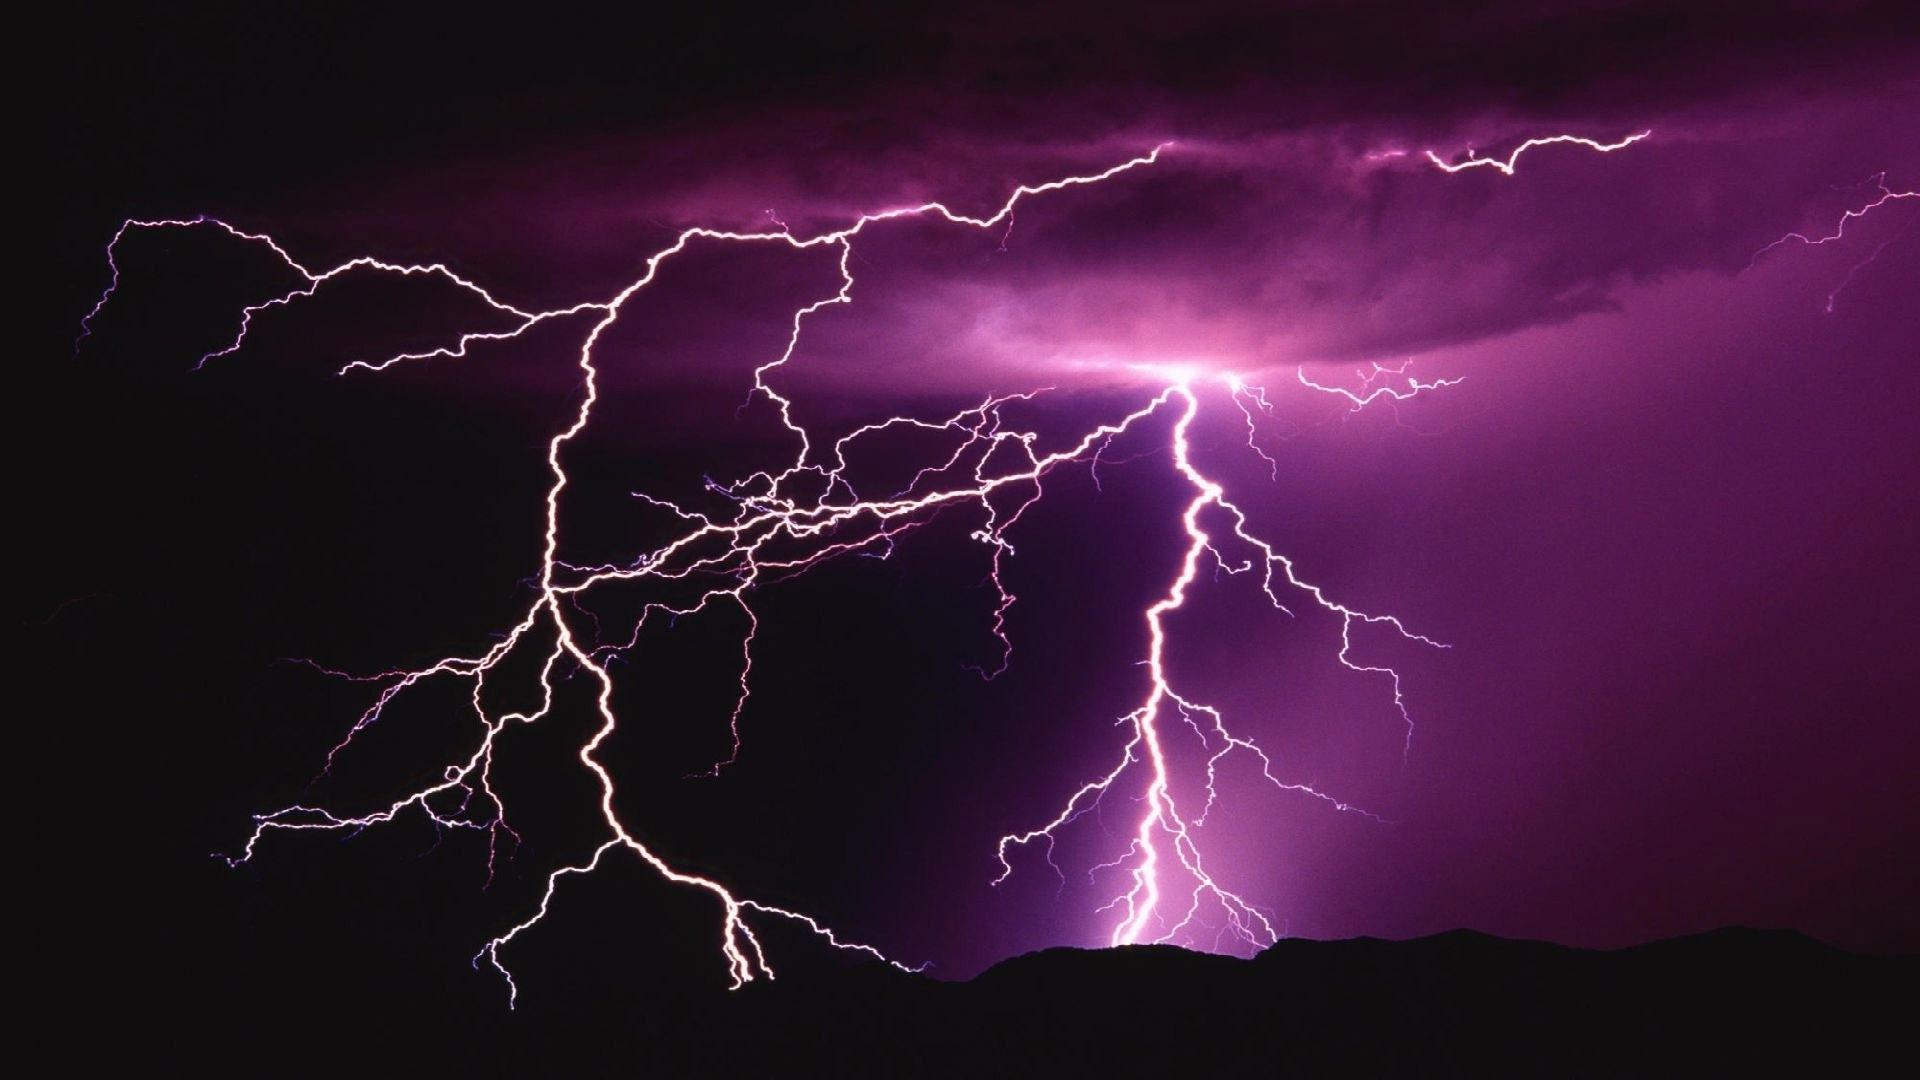 Lightning Storm Image Download Free